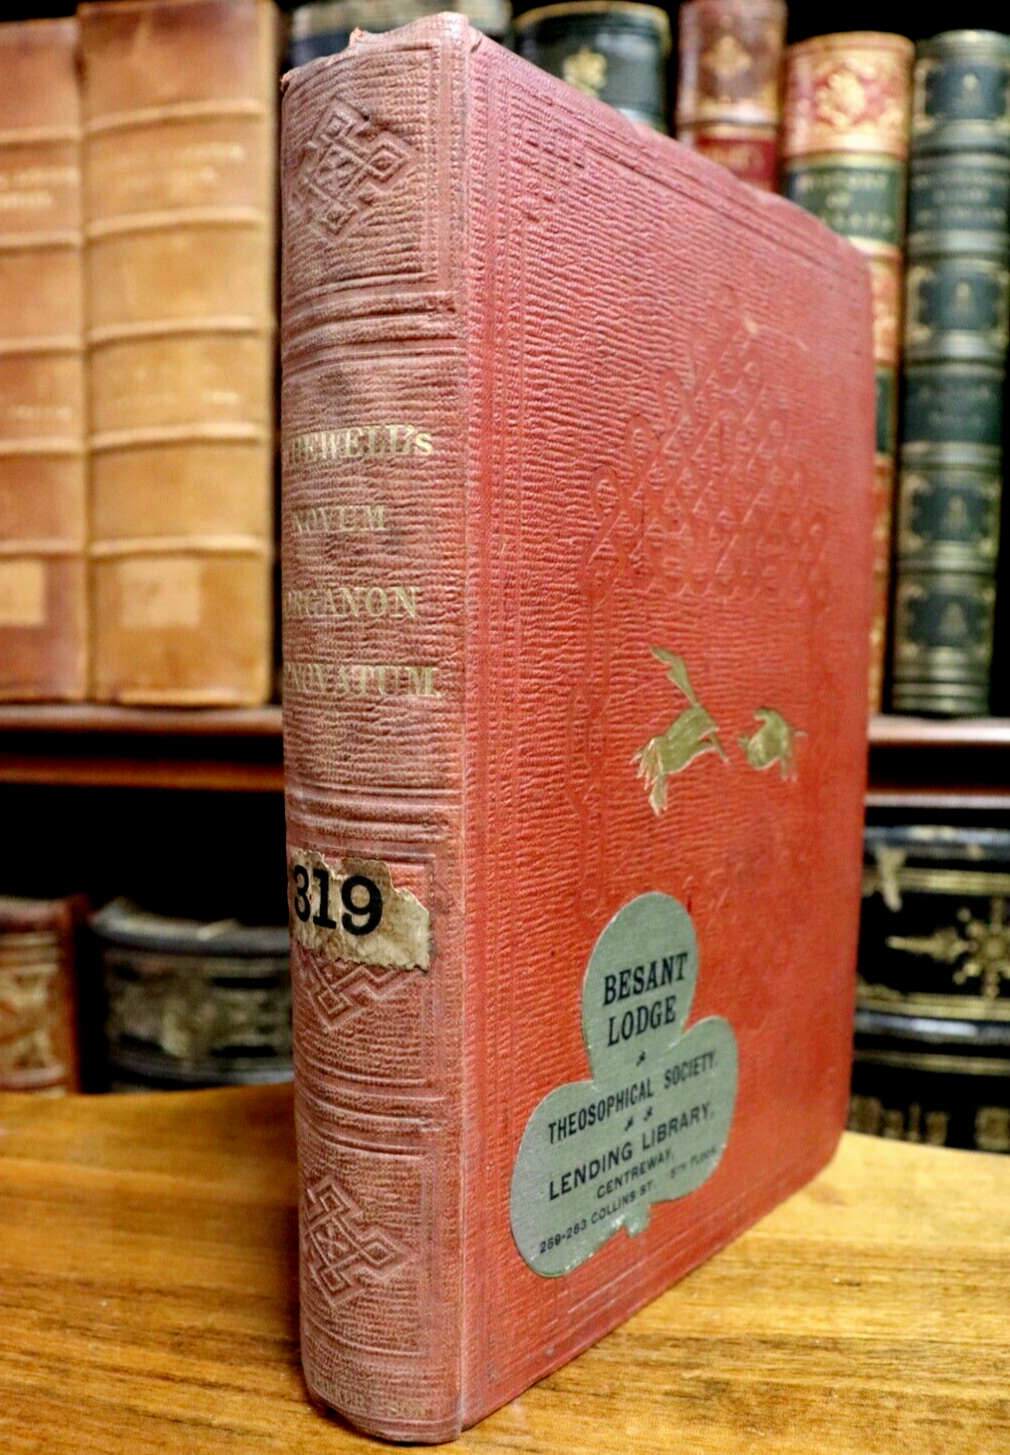 1858 Novum Organon Renovatum by W. Whewell Antiquarian Science Book